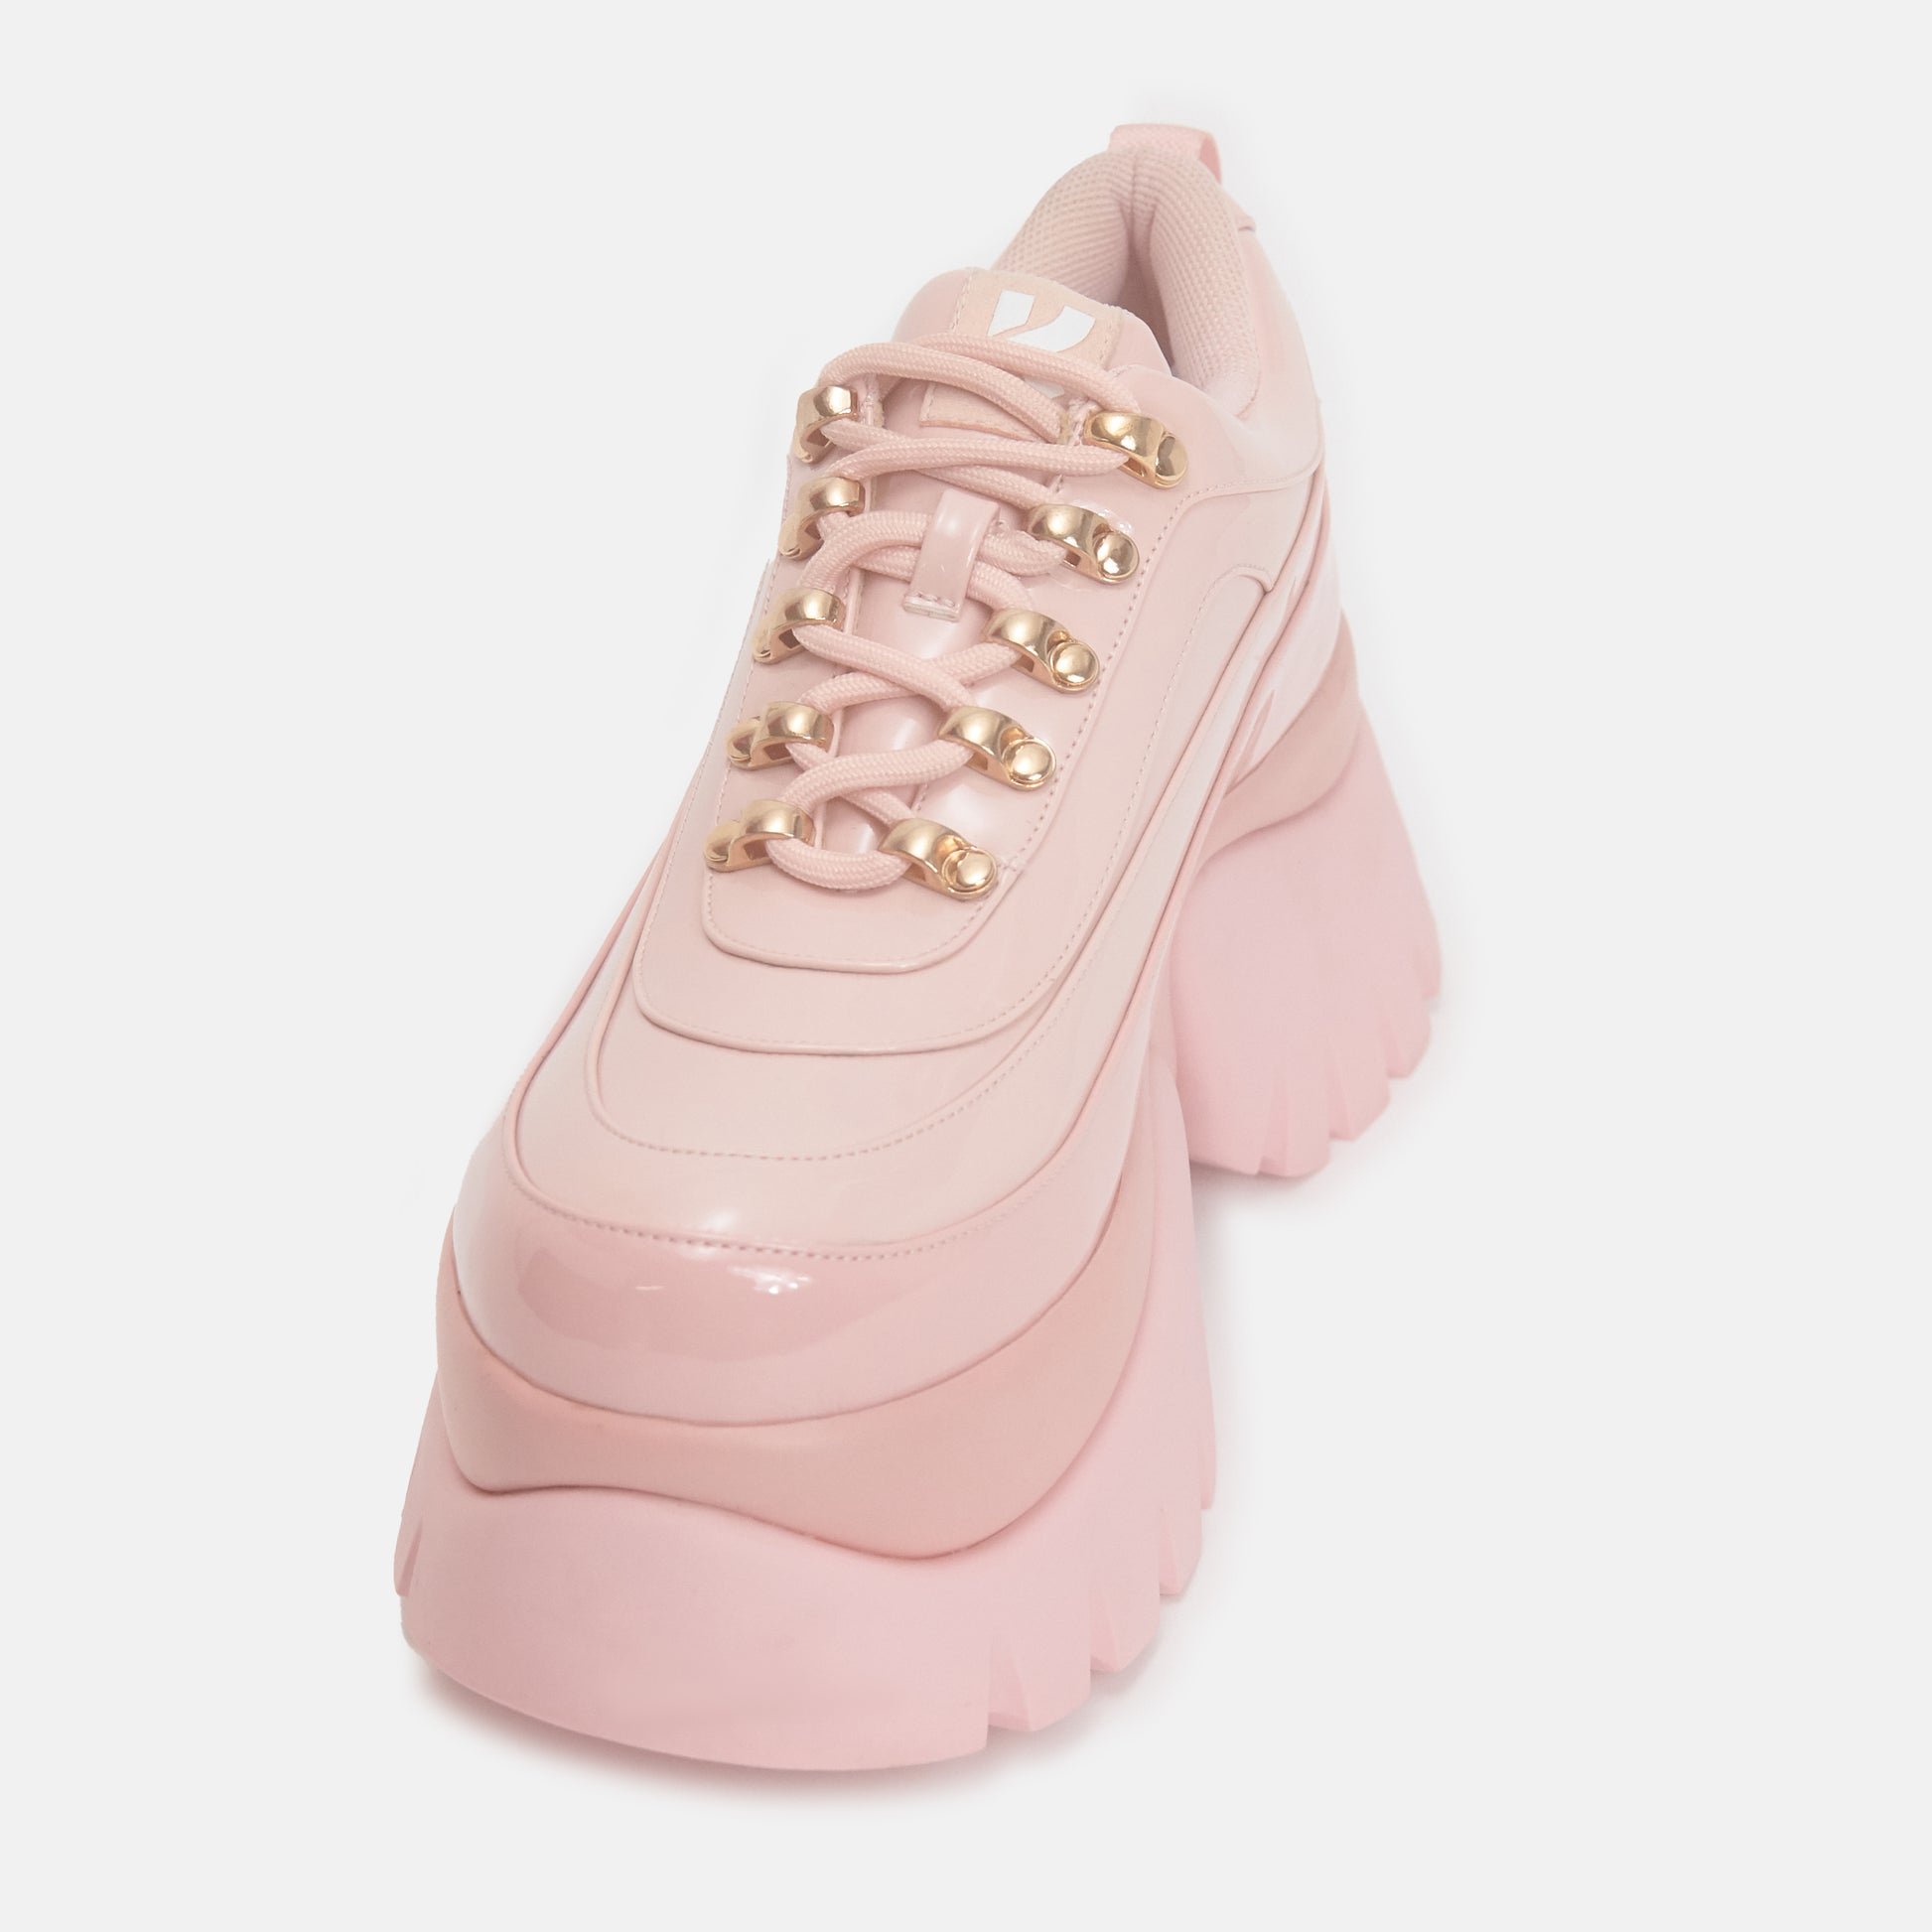 Cake Show Ballerina Platform Shoes - Shoes - KOI Footwear - Pink - Front Detail